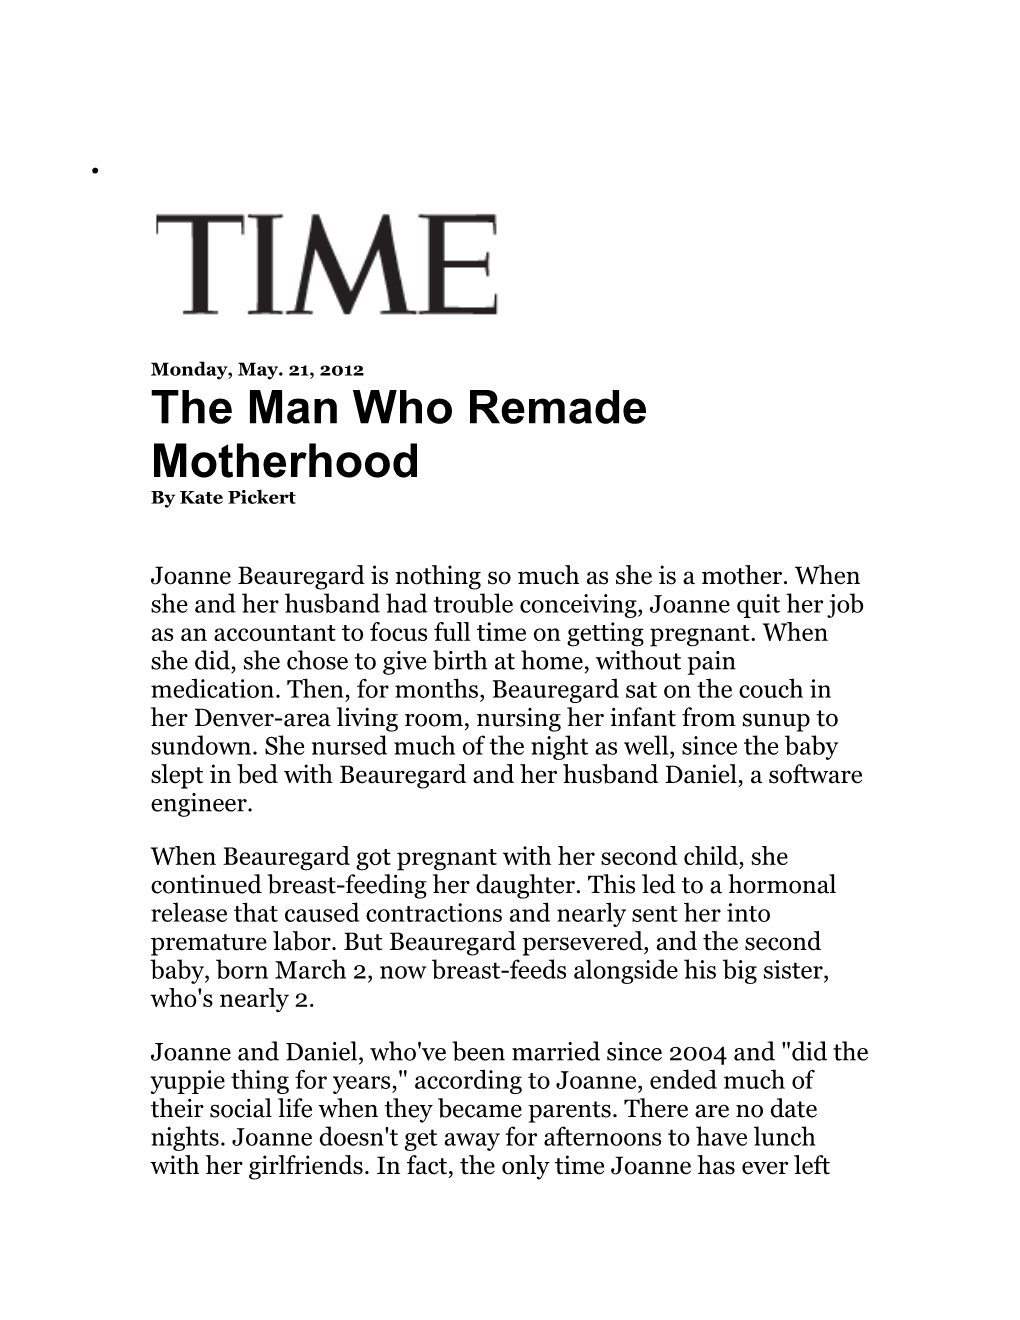 The Man Who Remade Motherhood